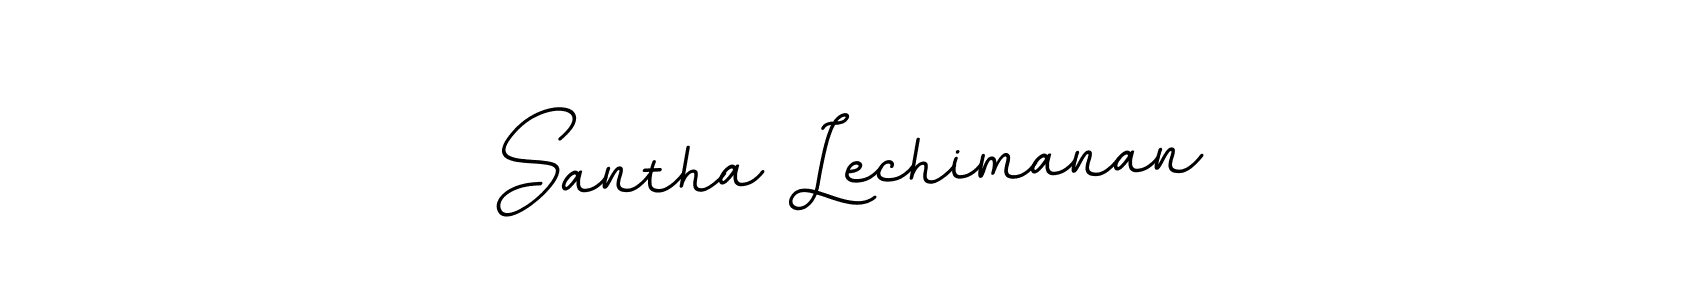 How to Draw Santha Lechimanan signature style? BallpointsItalic-DORy9 is a latest design signature styles for name Santha Lechimanan. Santha Lechimanan signature style 11 images and pictures png